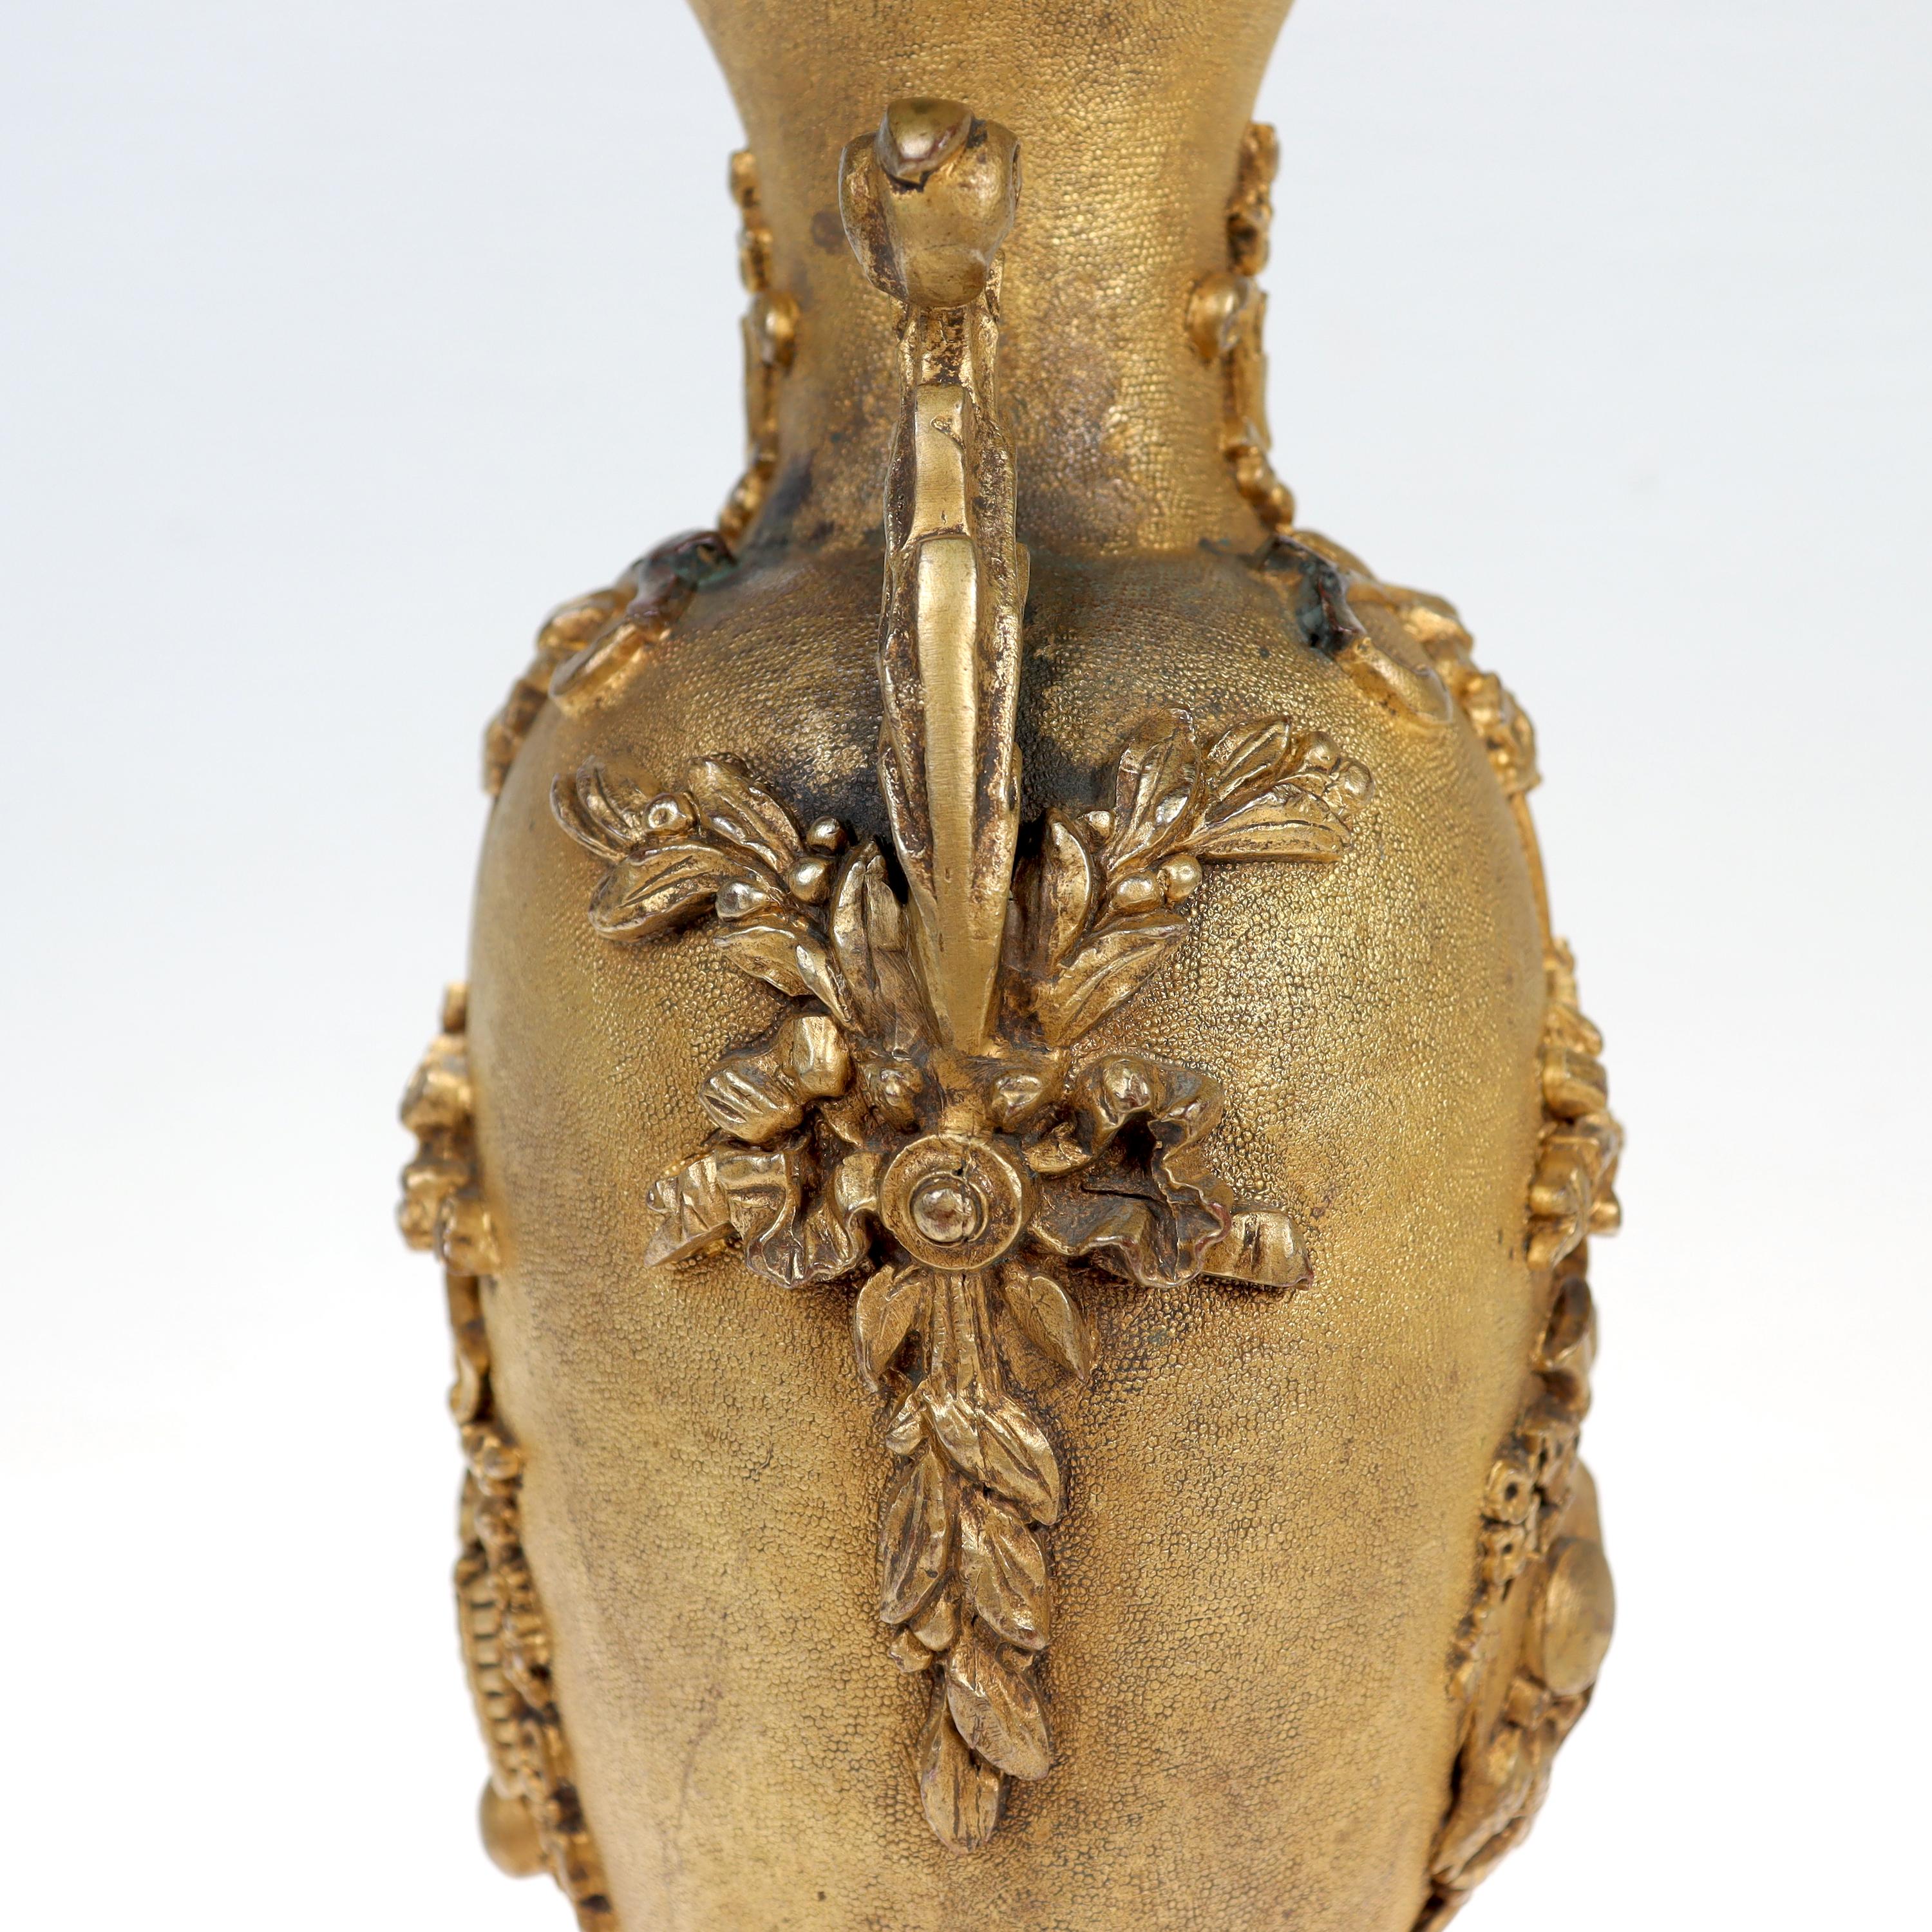 Antique Second Empire French Doré Gilt Bronze Vases or Urns For Sale 6